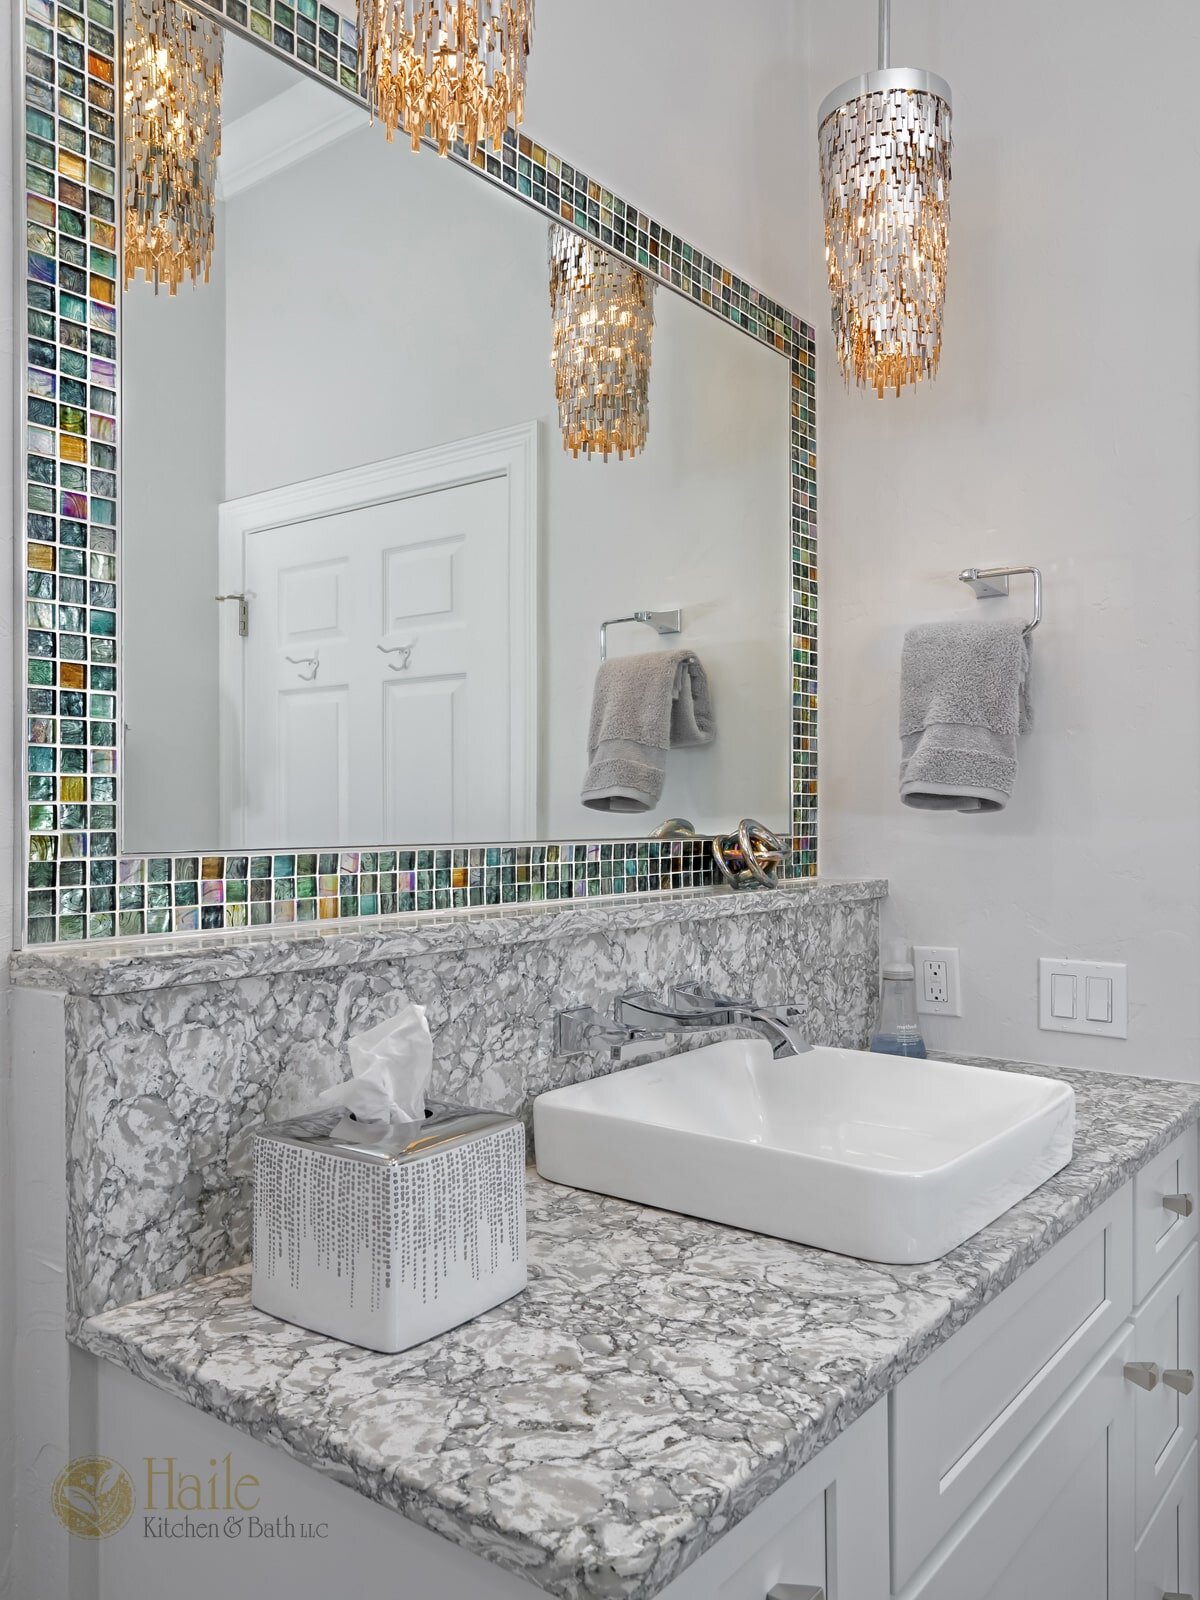 bath design with tile framed mirror